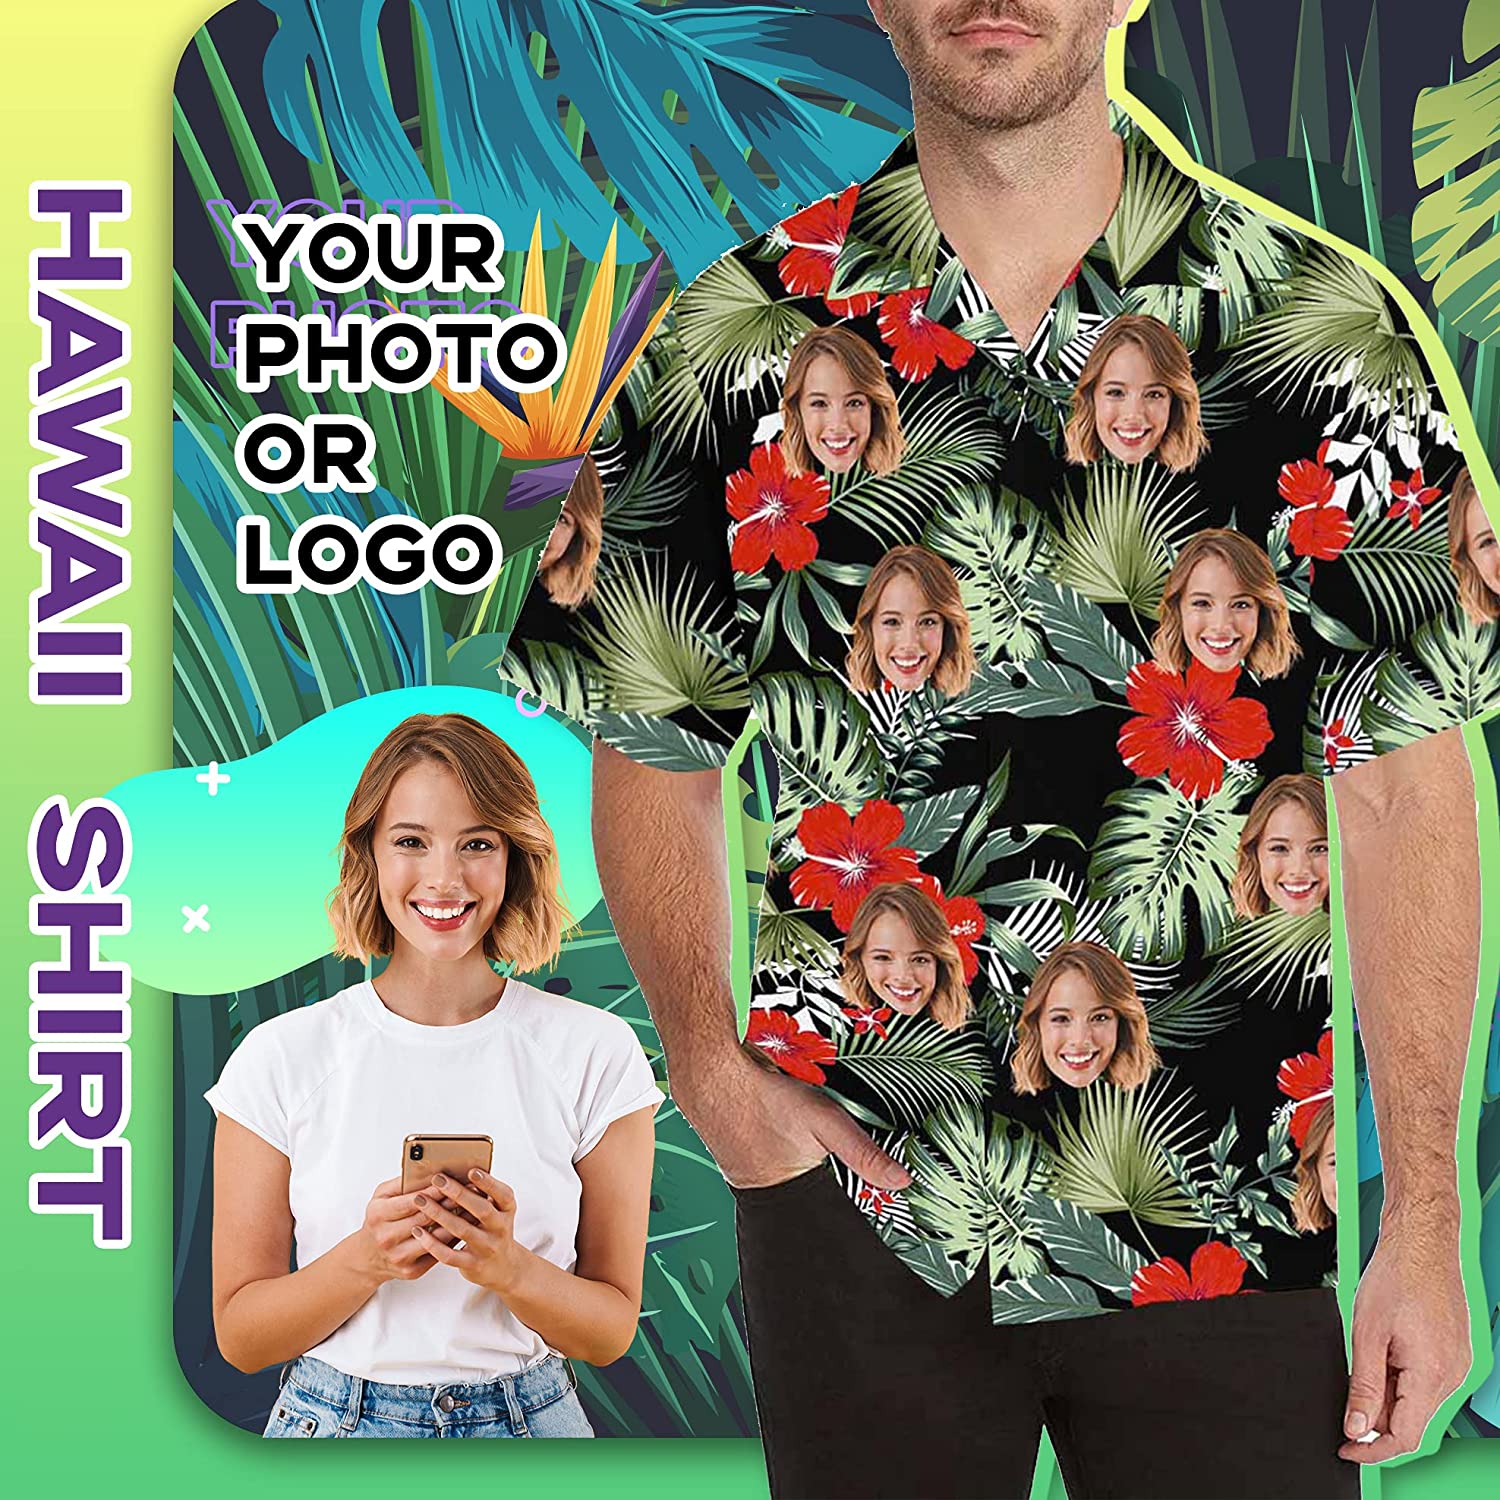 Milwaukee Brewers Hawaiian Shirt Cool Tiki Palm Tree Personalized